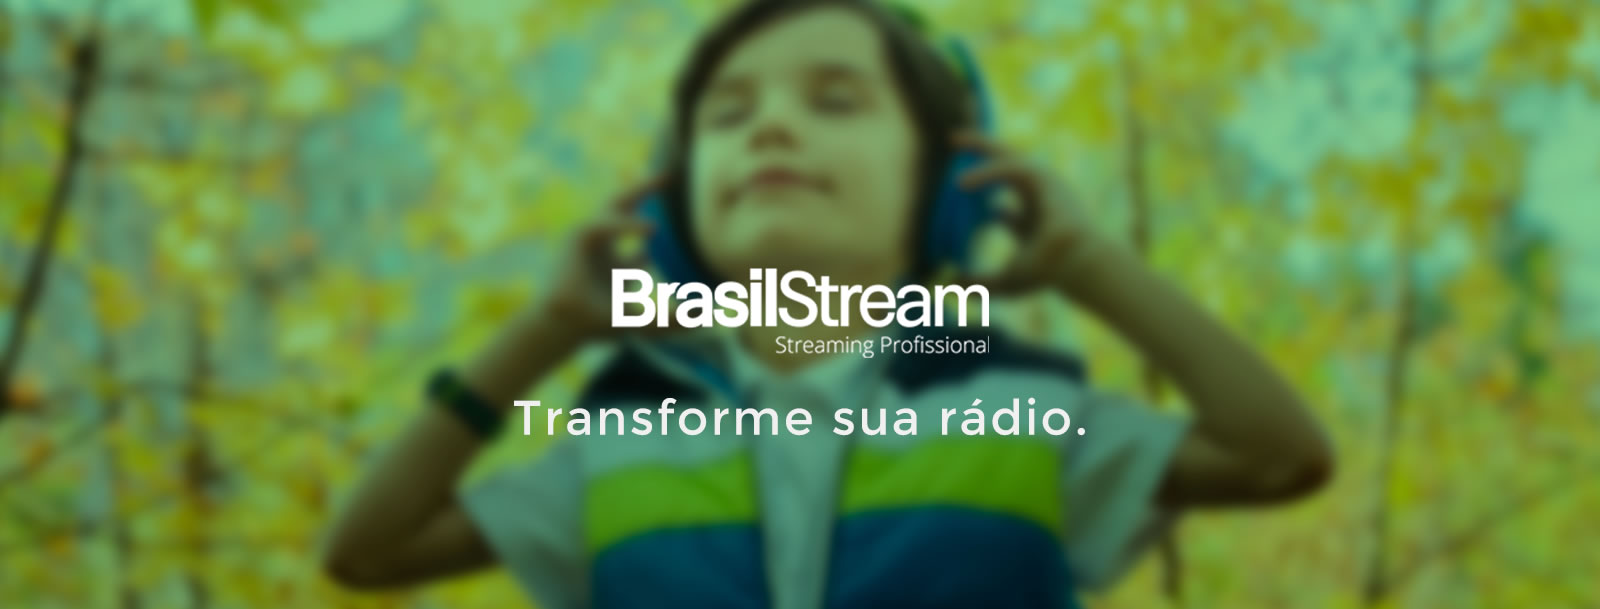 (c) Brasilstream.com.br